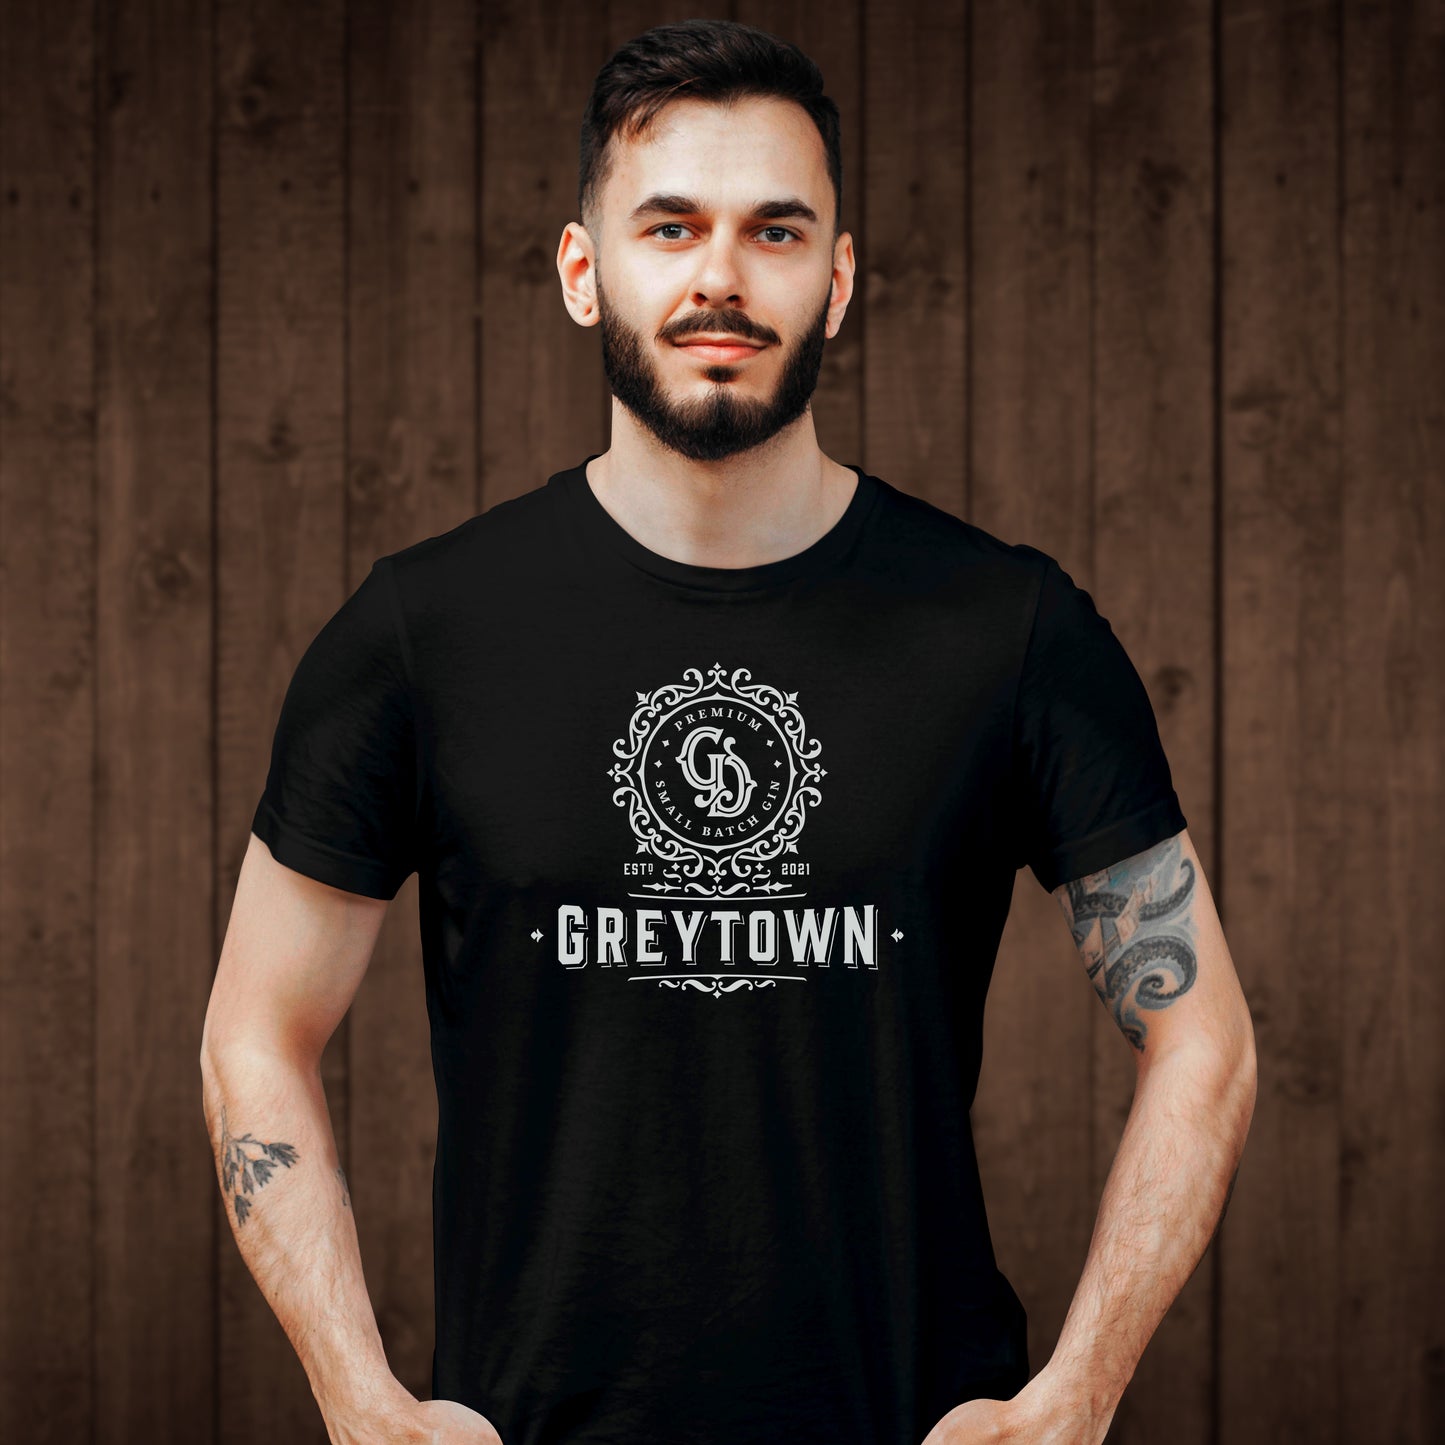 Greytown Distilling Company Tee Shirt - Male